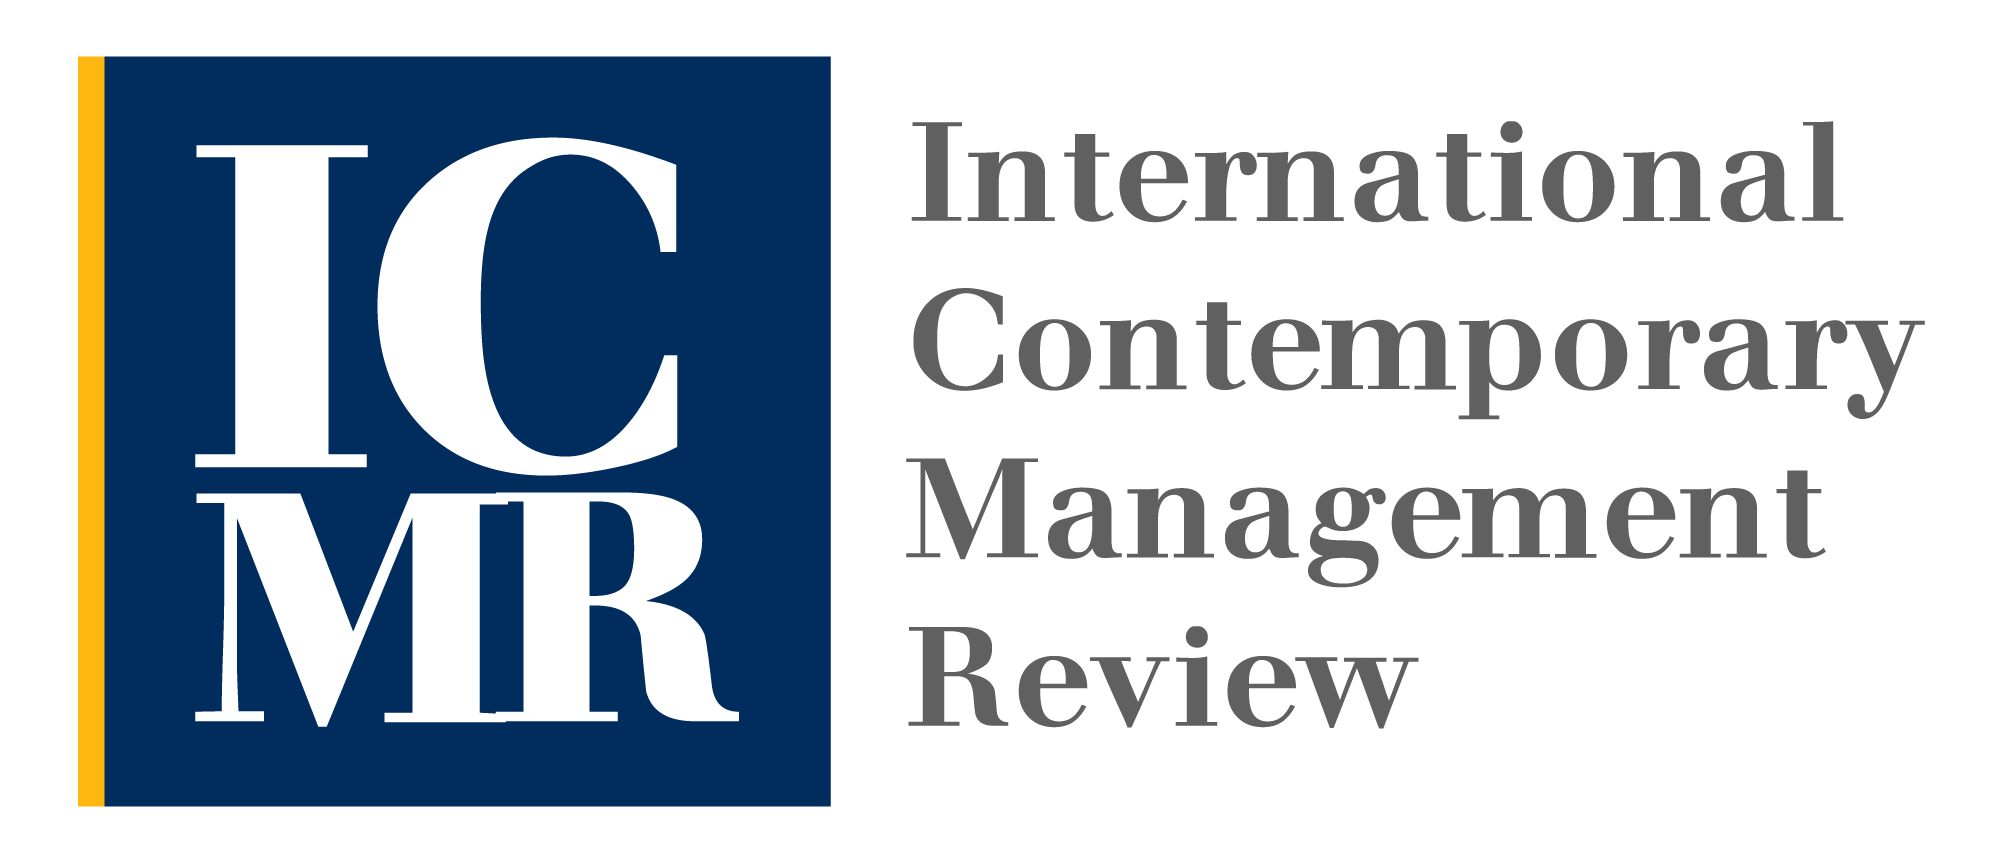 International Contemporary Management Review